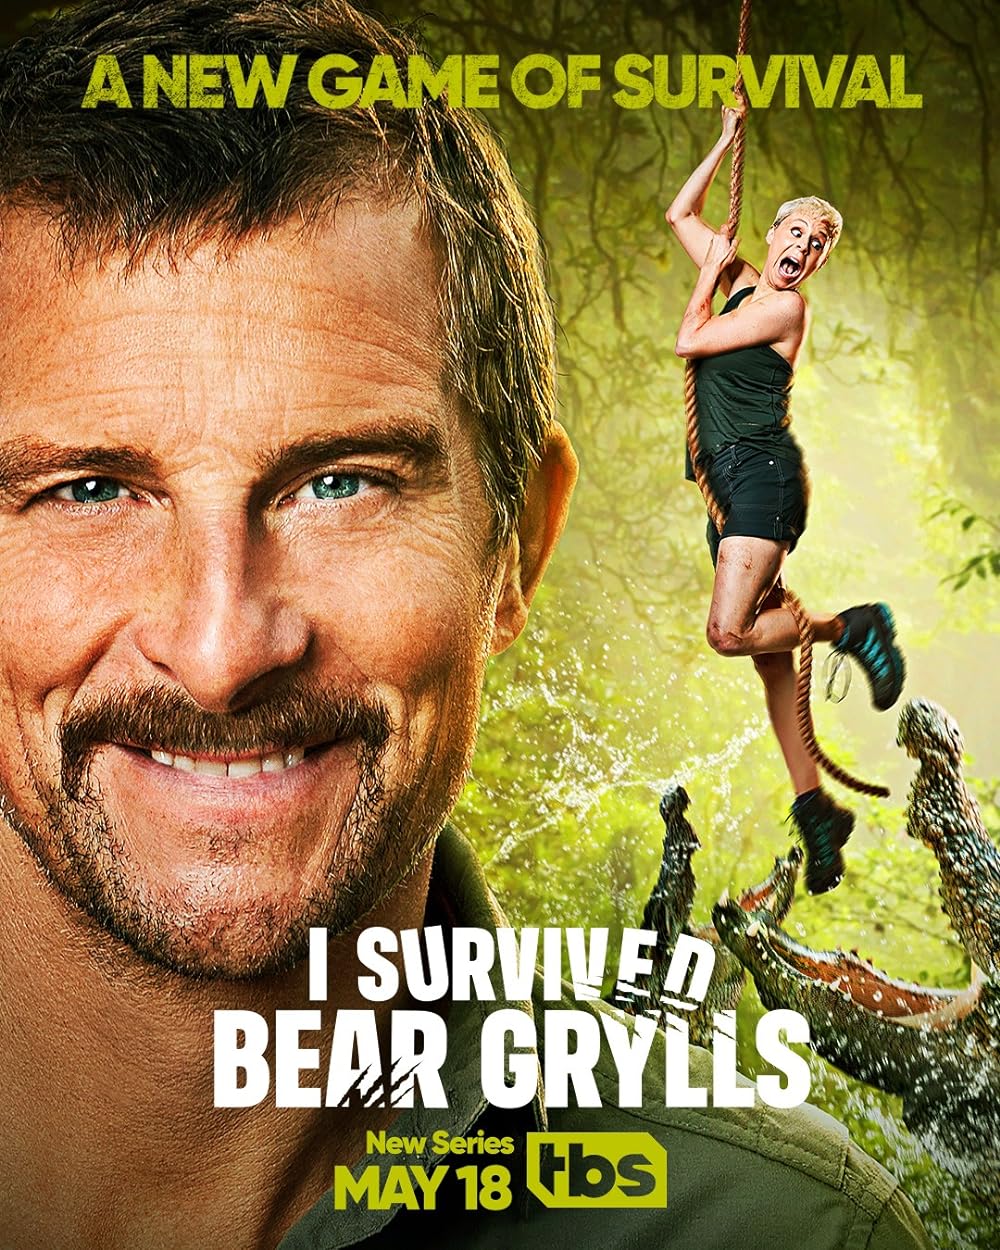 I Survived Bear Grylls